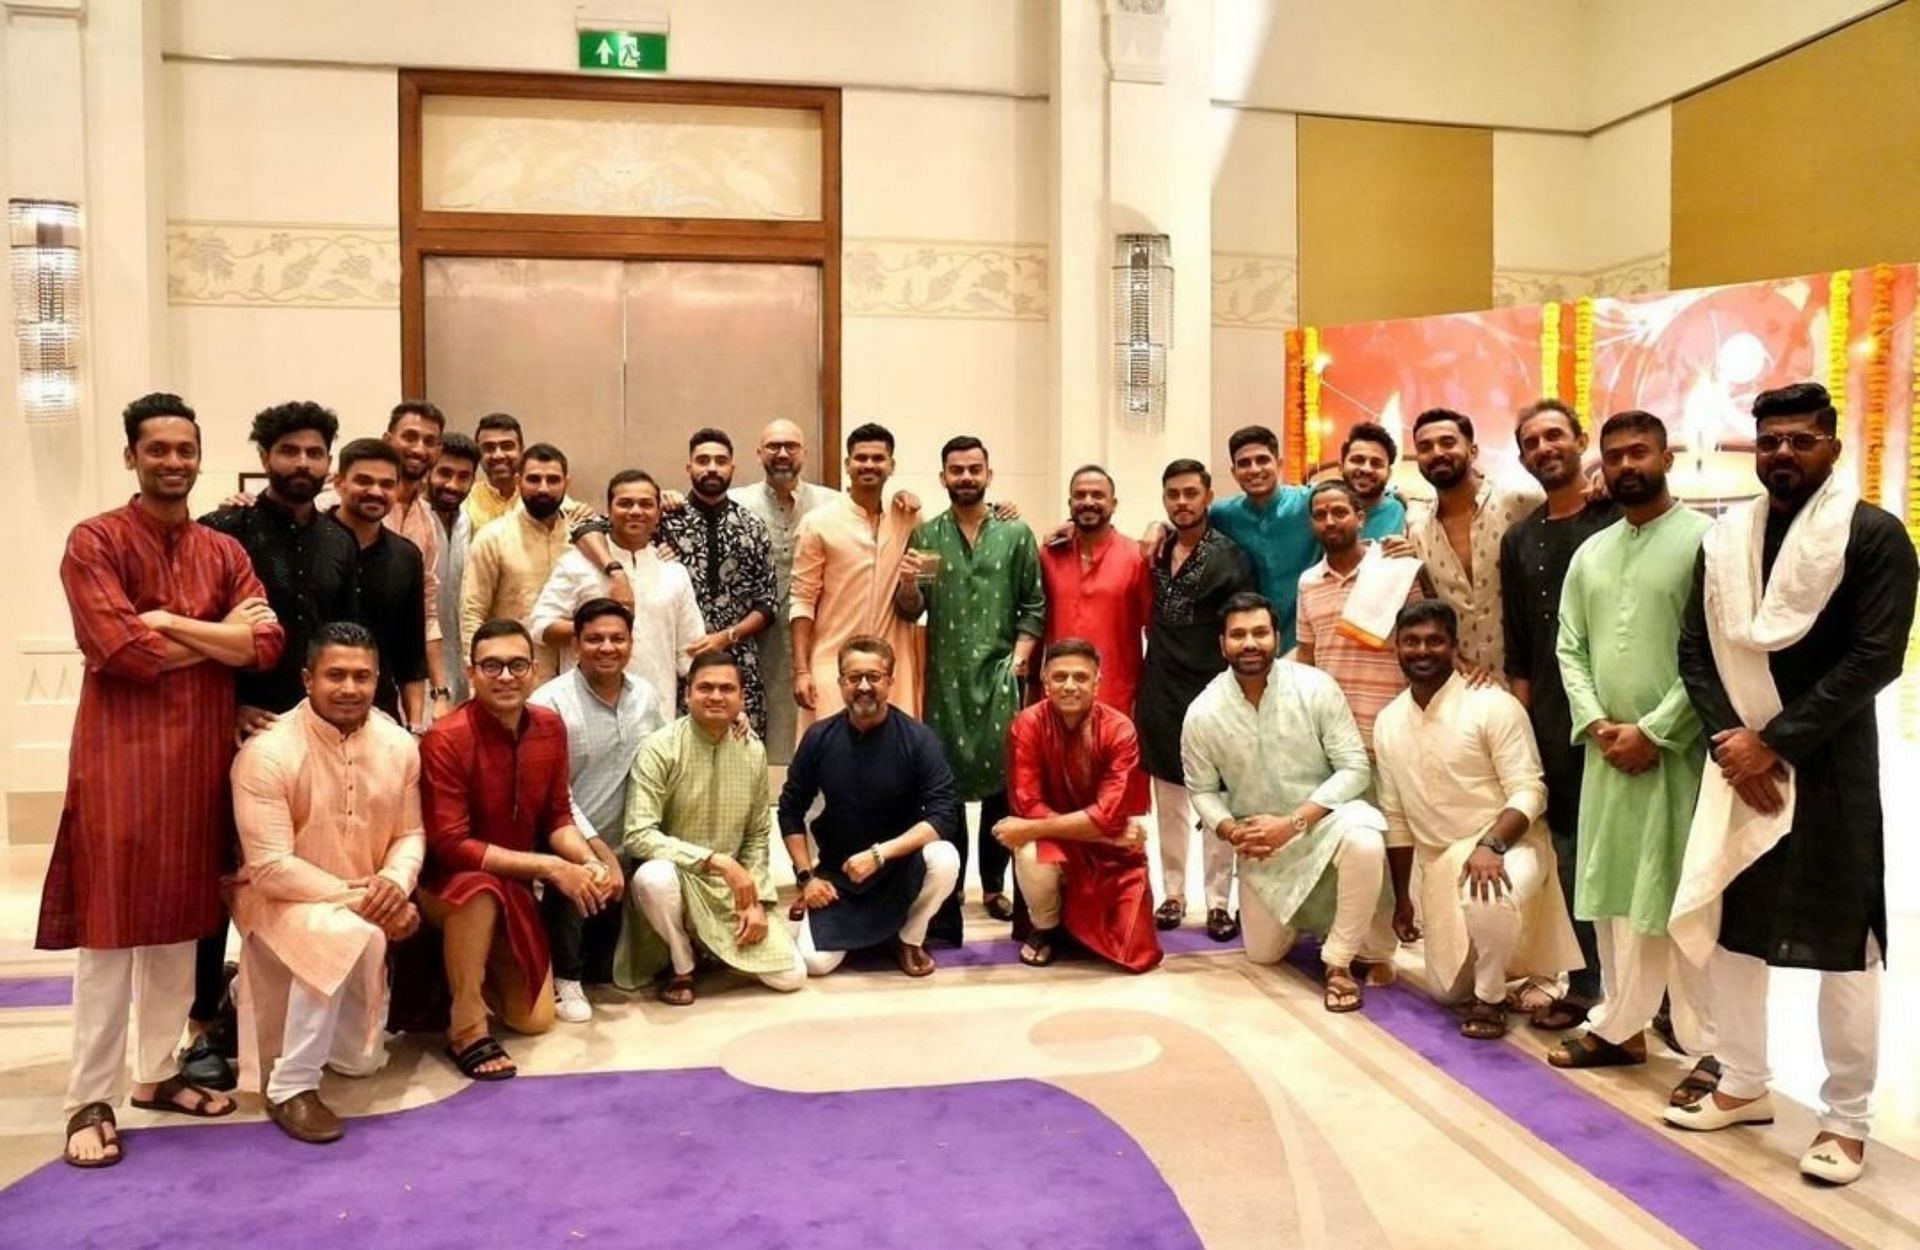 Team India contingent celebrating Diwali together on Saturday. (PC: Instagram)